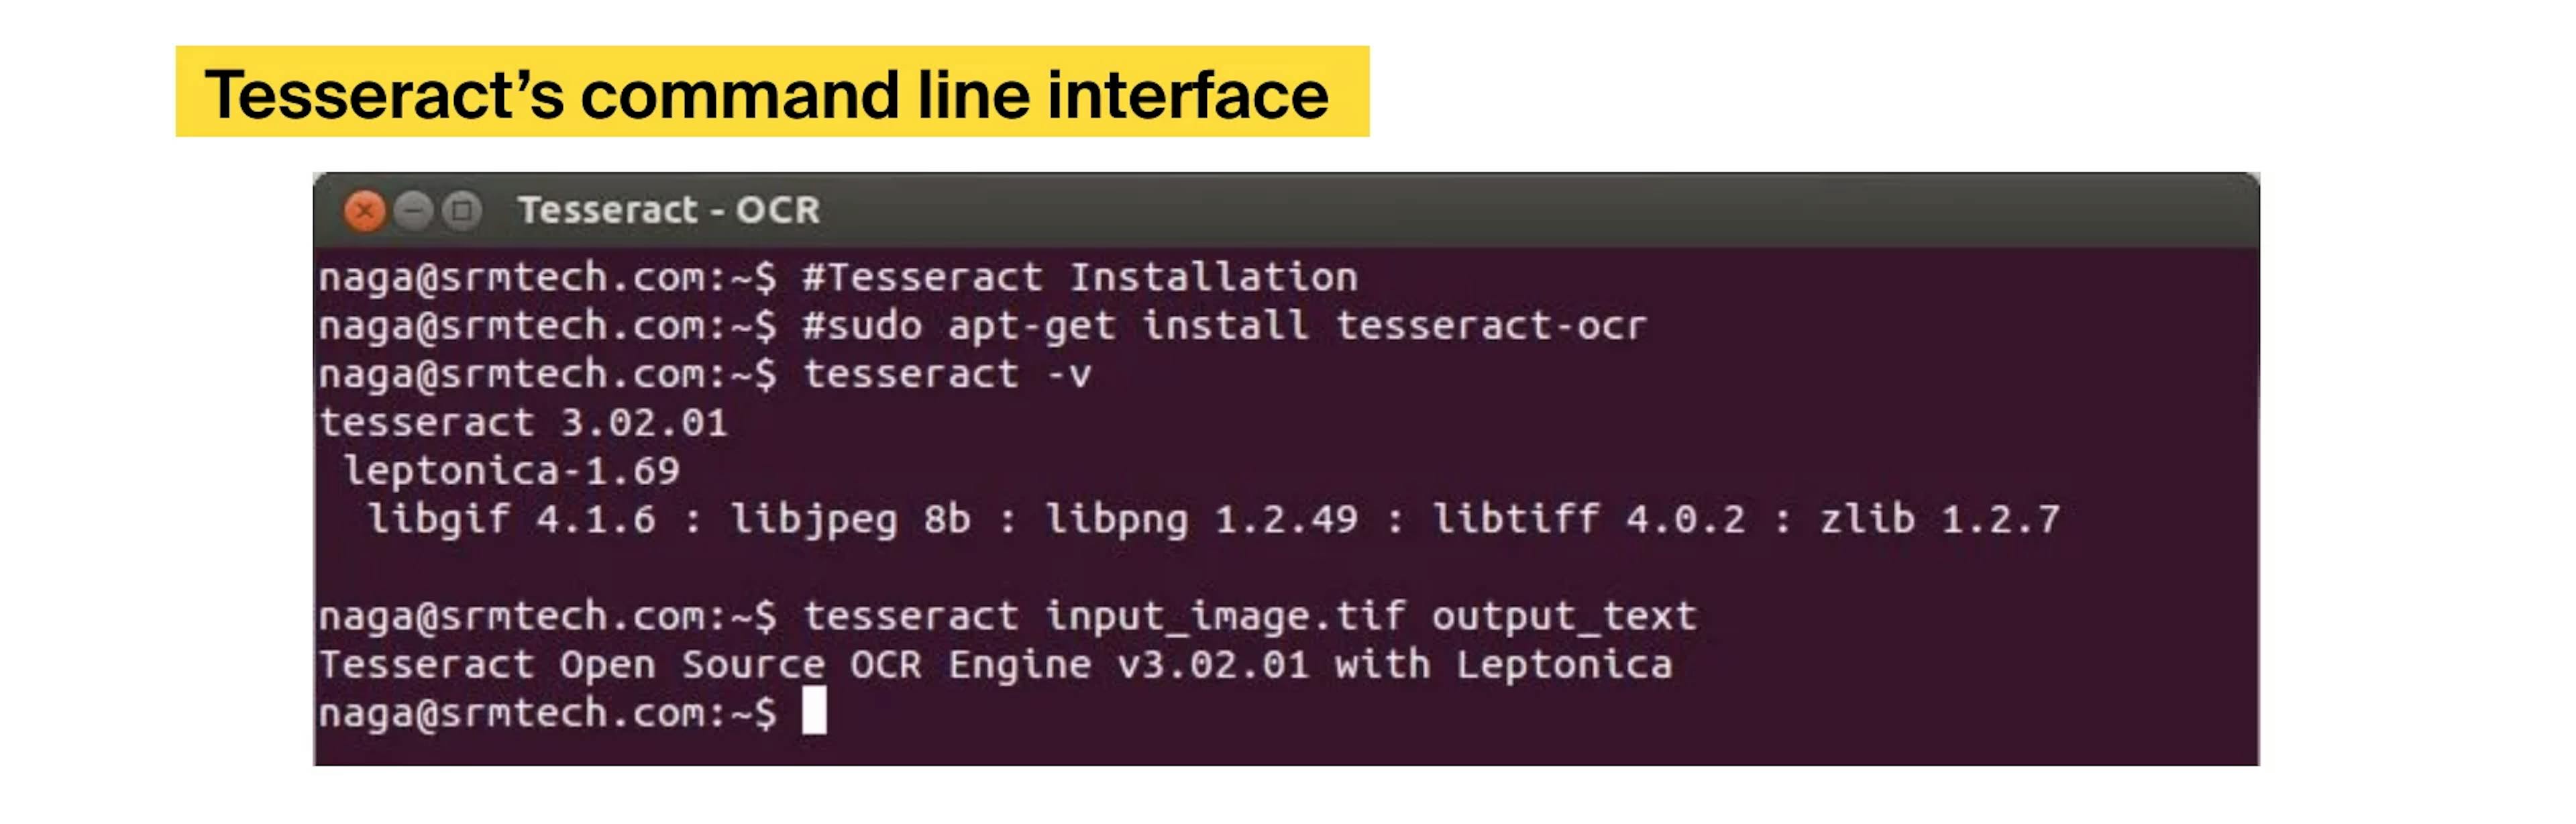 Tesseract’s command-line interface